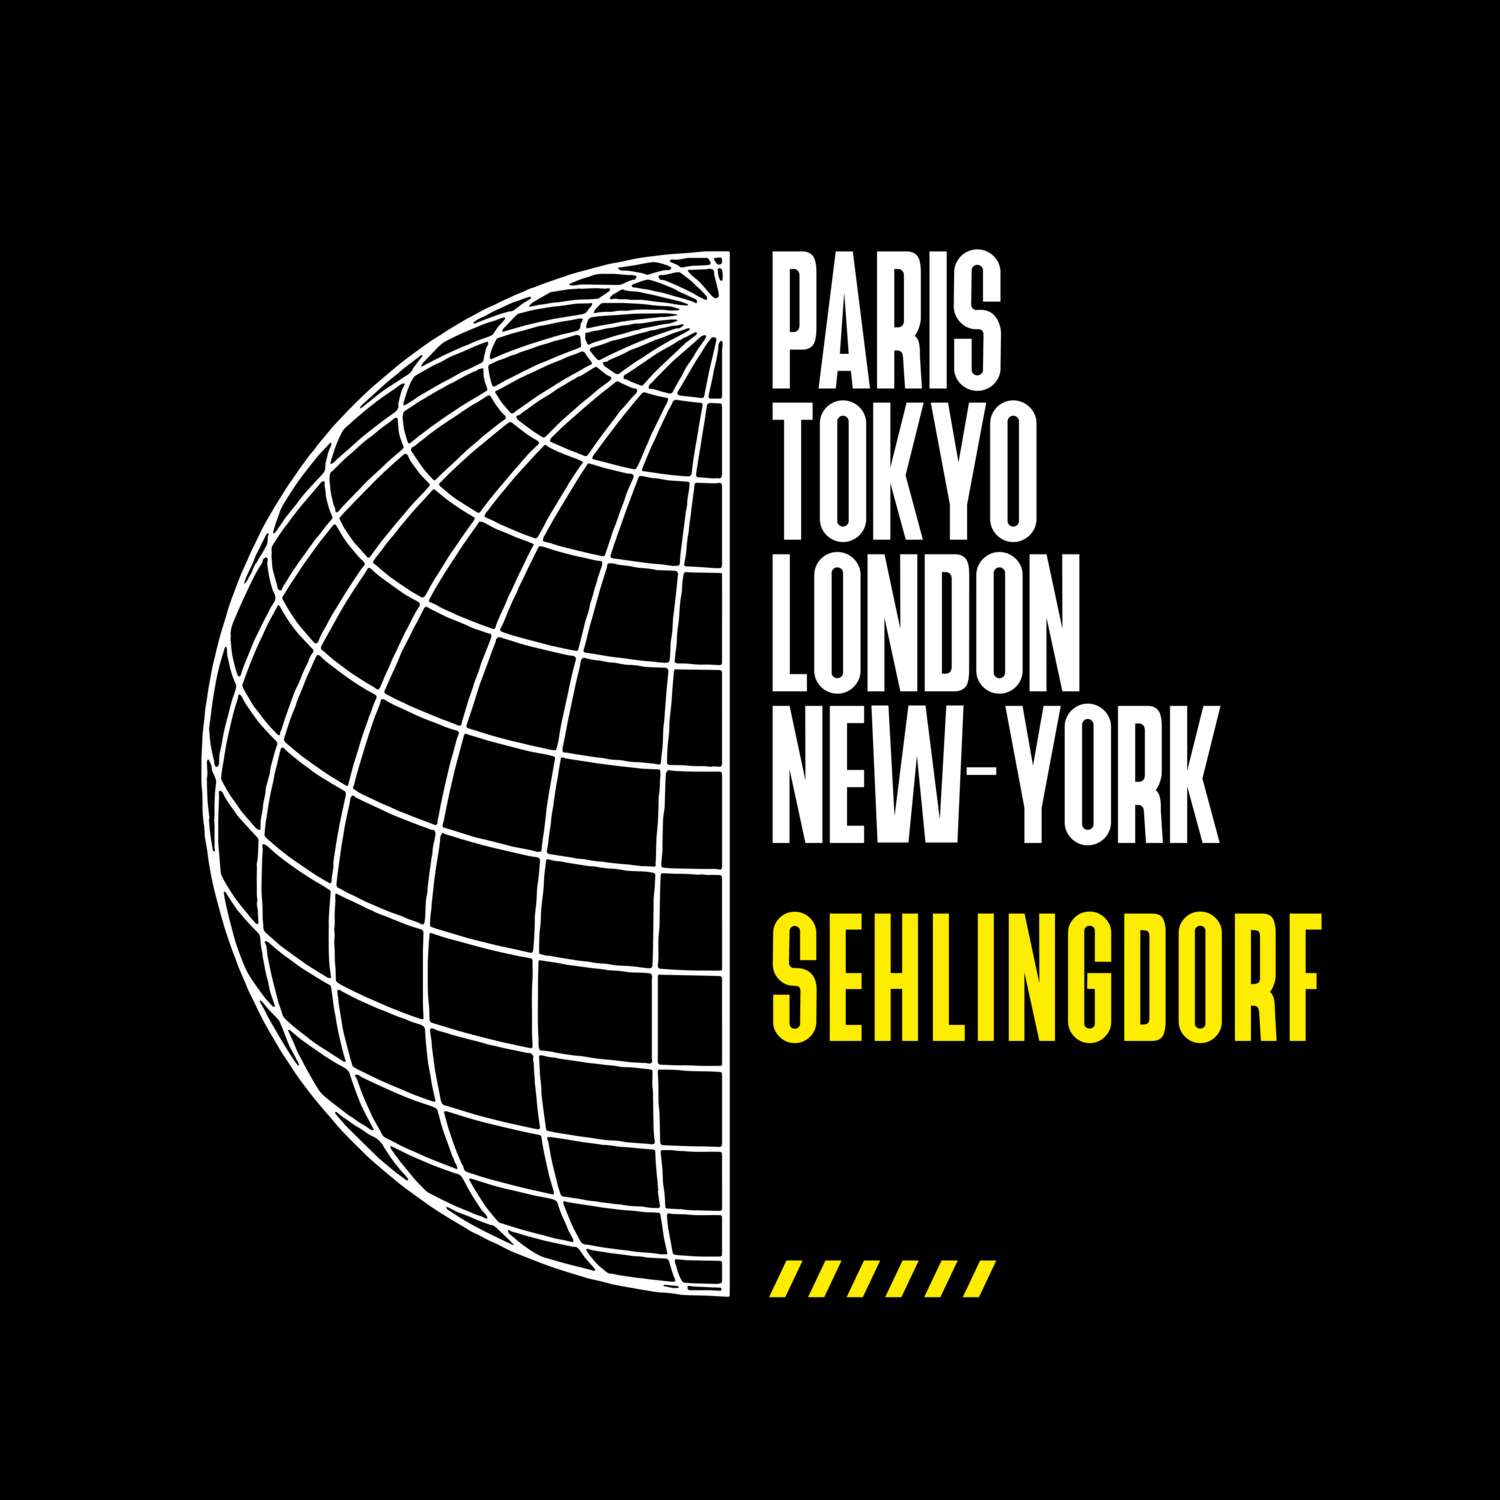 Sehlingdorf T-Shirt »Paris Tokyo London«